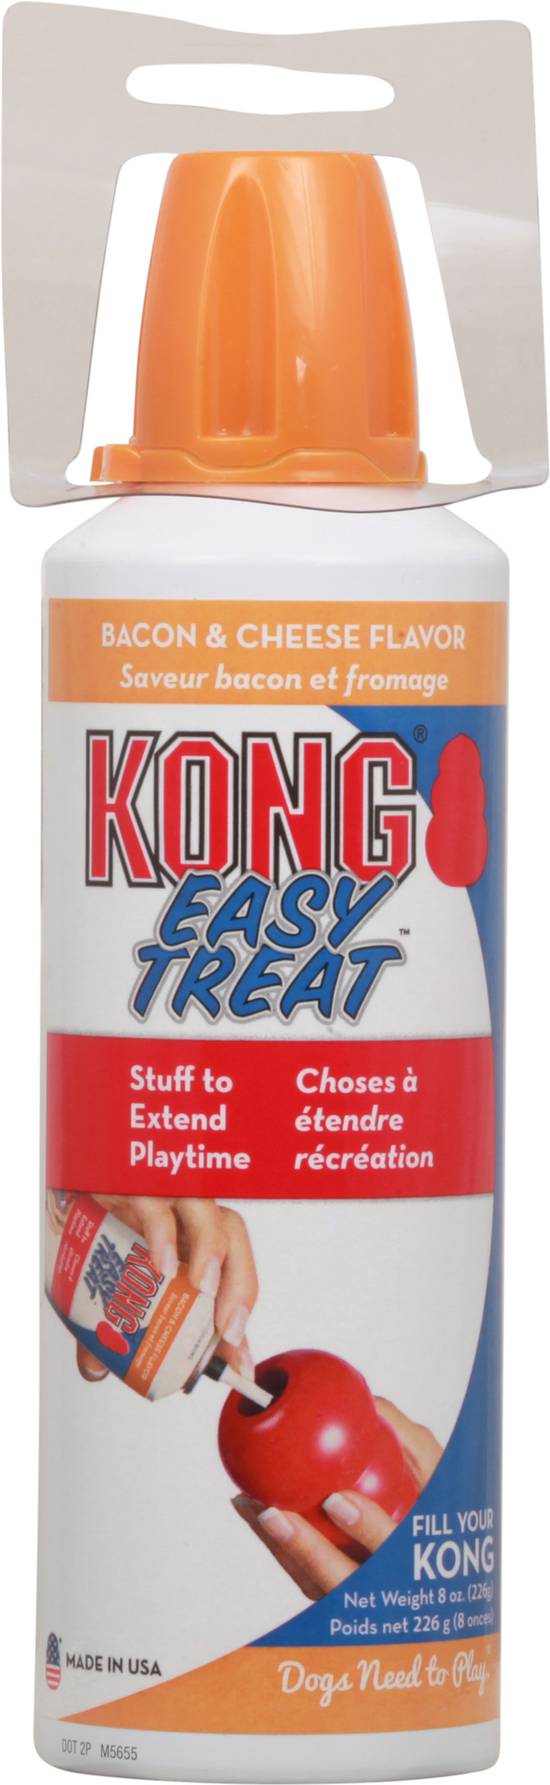 Kong Easy Treat Bacon and Cheese, 8 Ounce ( 8 ounce)